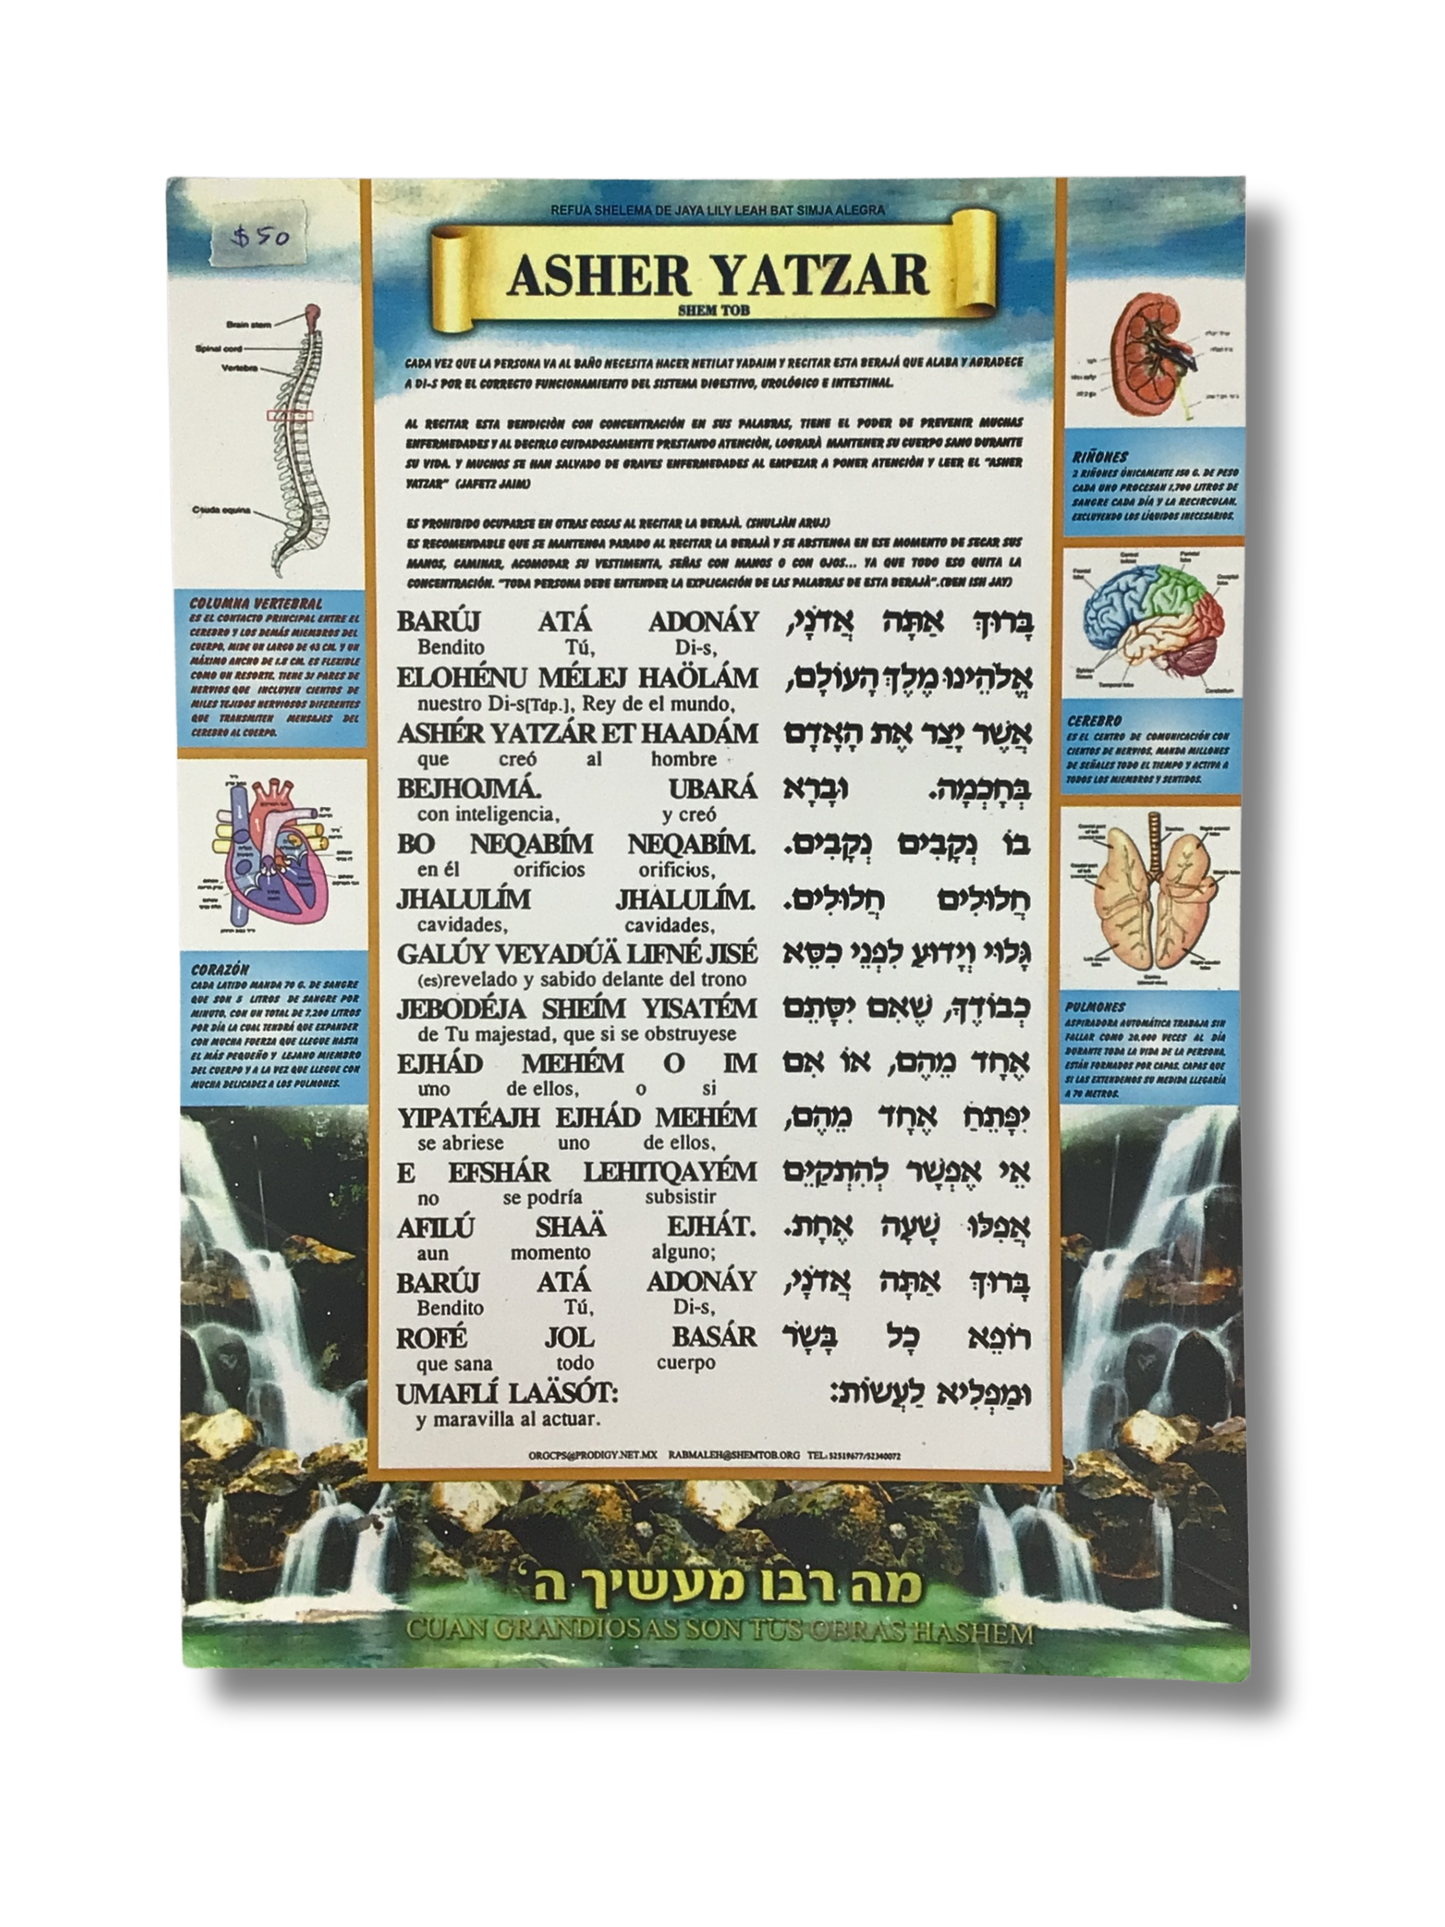 Asher Yatzar poster mediano 2345